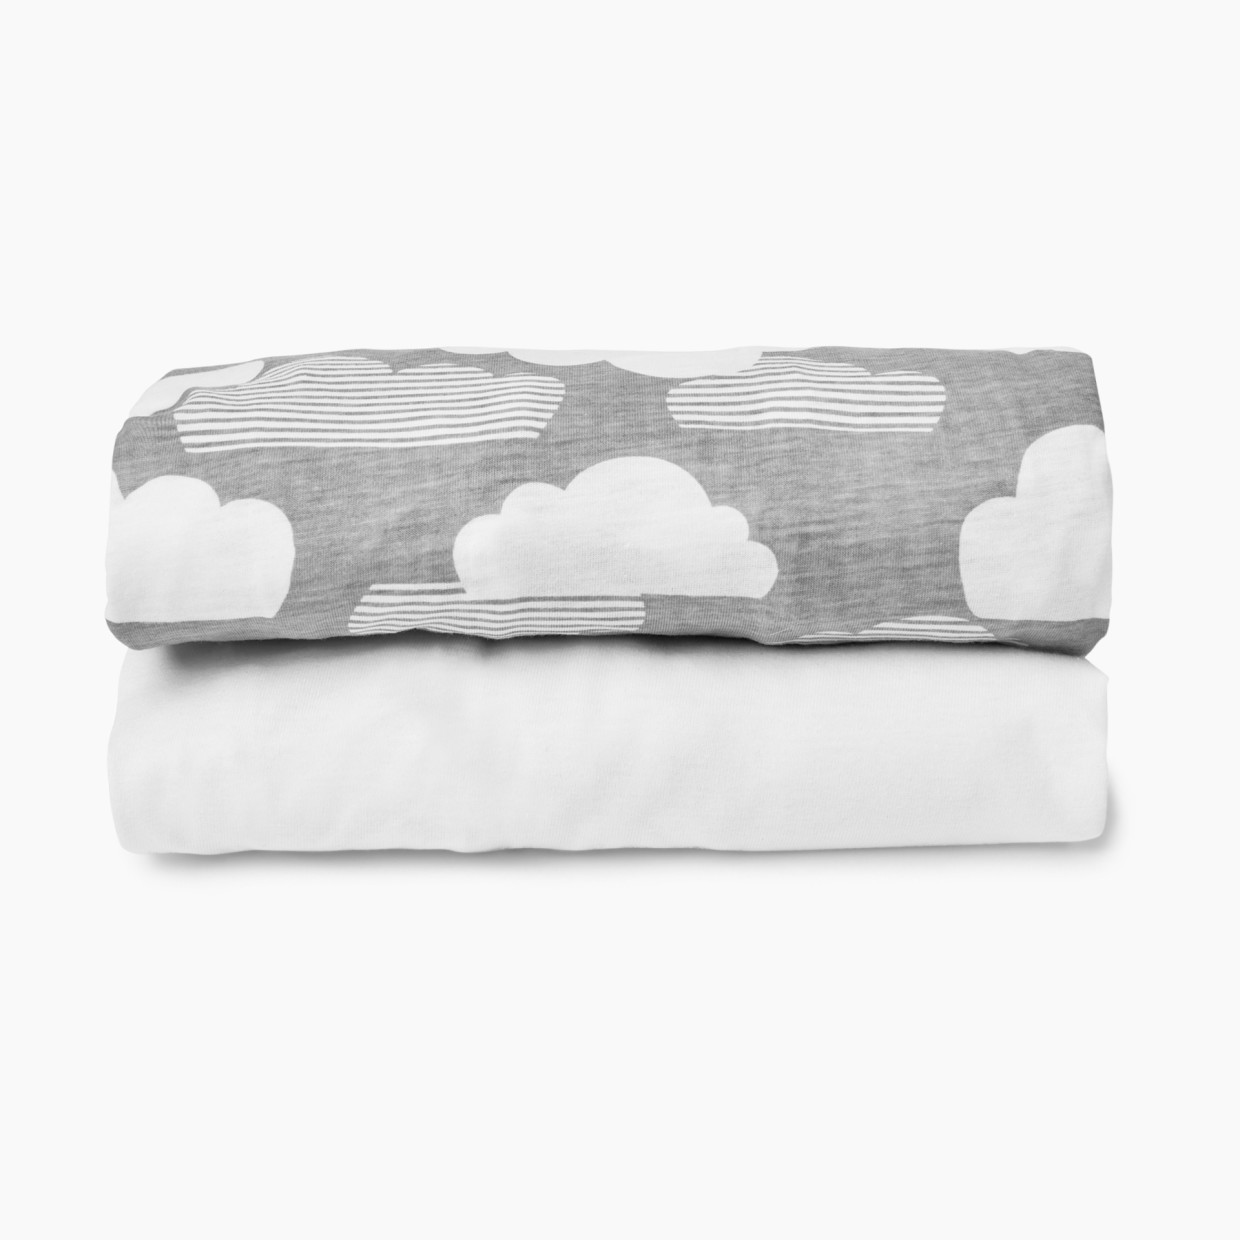 Skip Hop Play-to-Night Travel Crib Sheet Set - White/Grey Clouds.